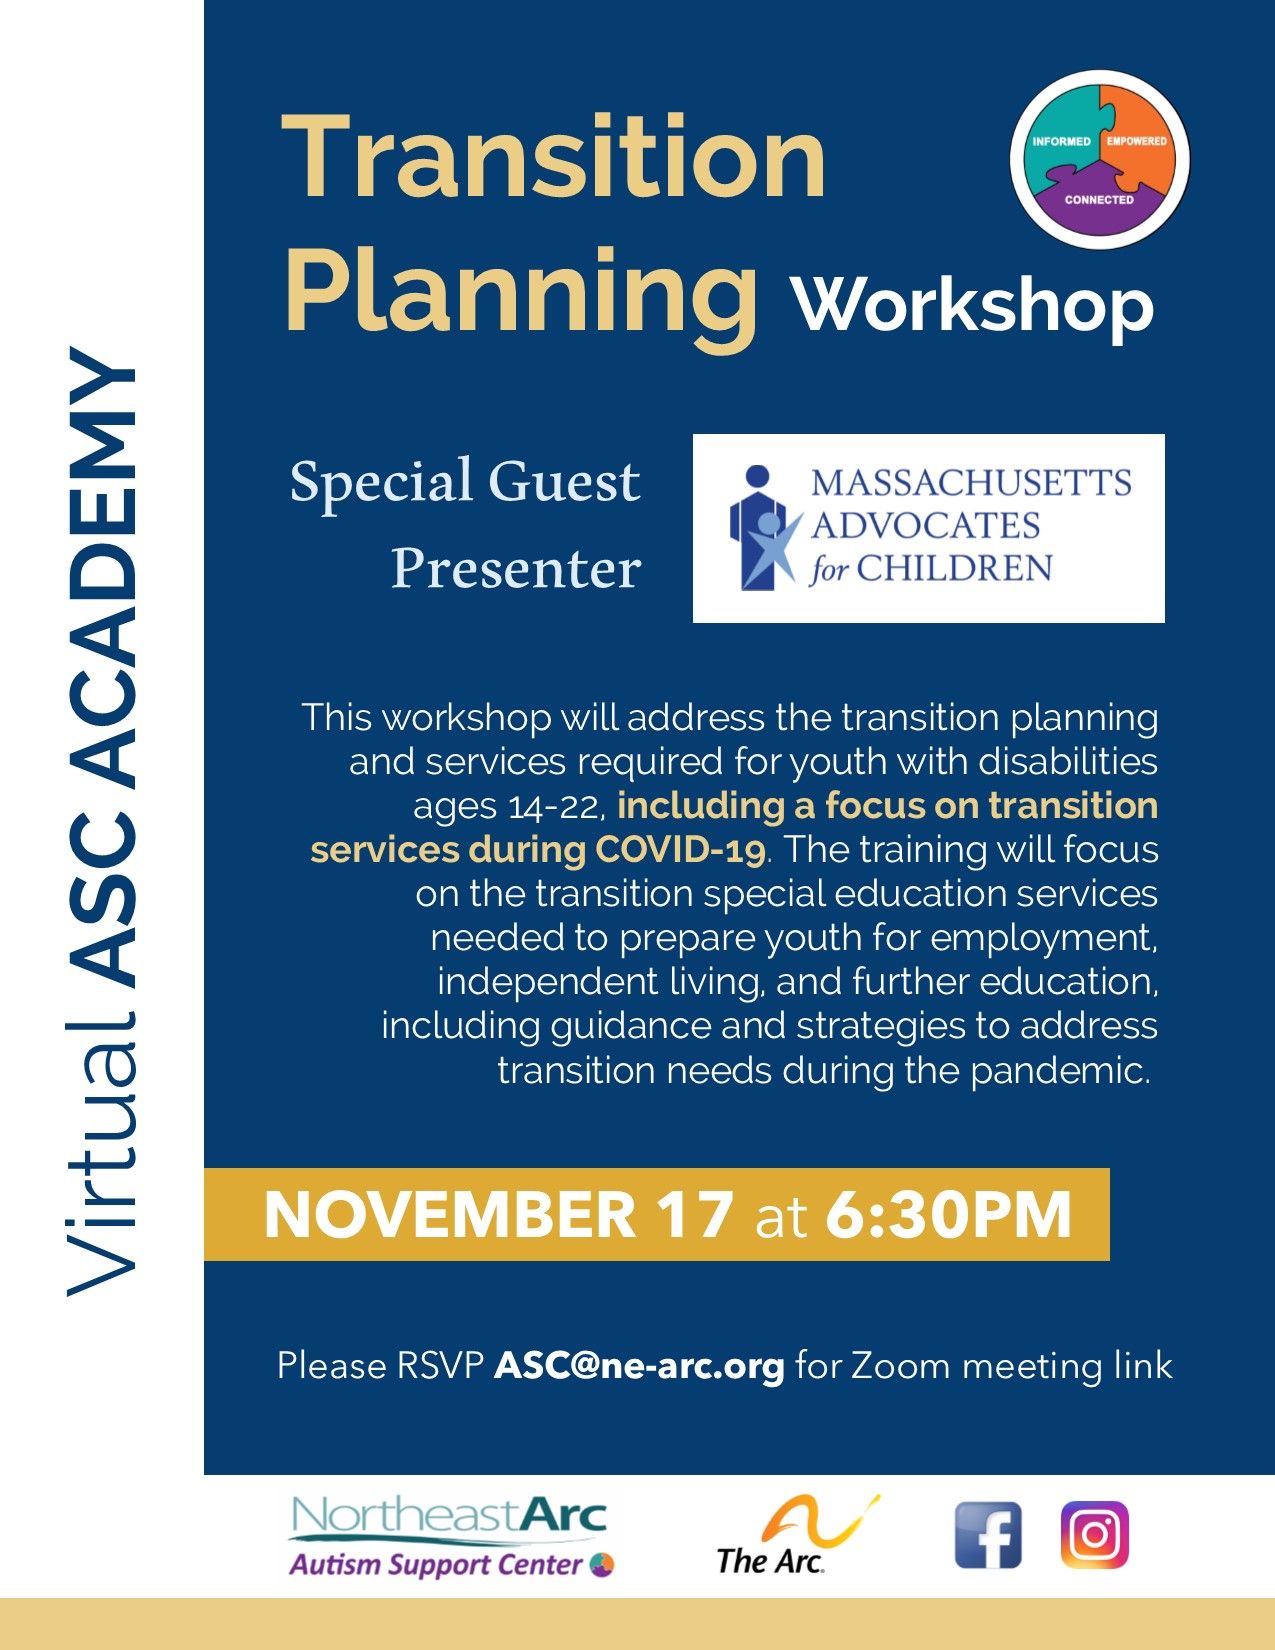 Flyer for Transition Planning Workshop presented by Massachusetts Advocates for Children